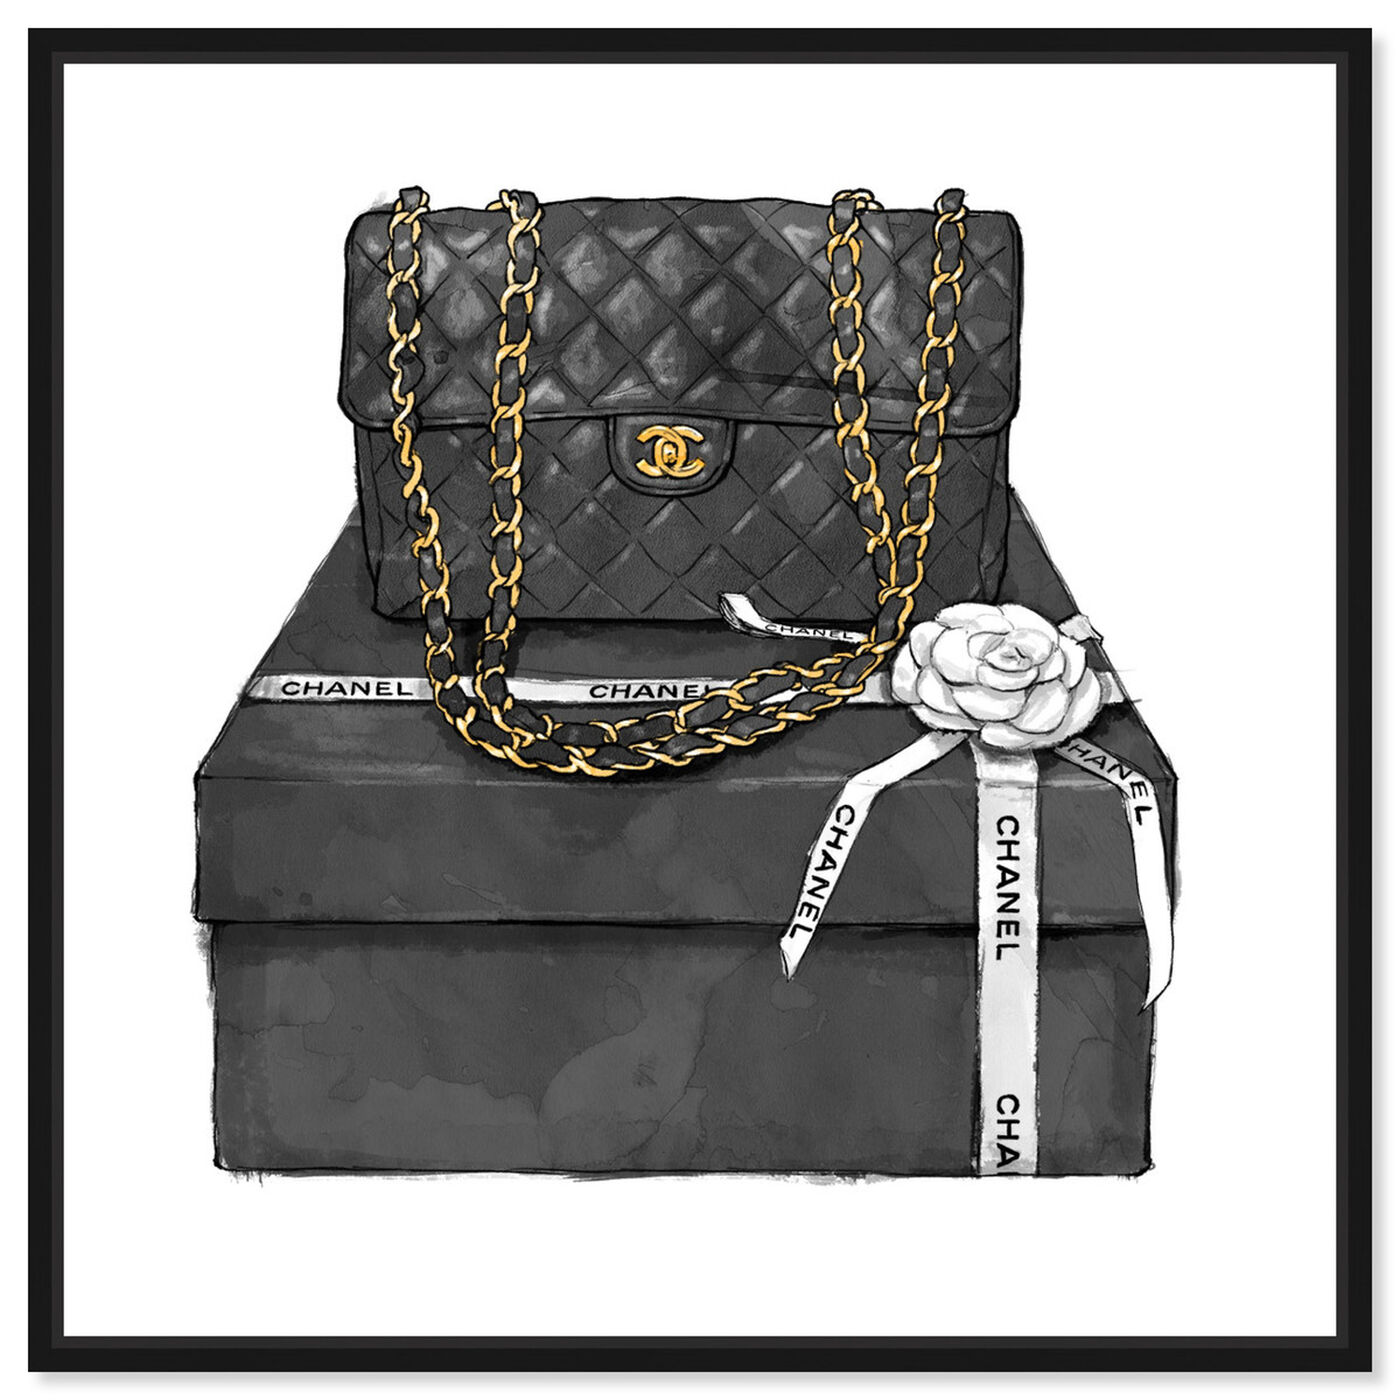 Oliver Gal 'Royal Handbag Chocolate' Fashion and Glam Wall Art Framed Canvas Print Handbags - Brown, White - 20 x 20 - Black